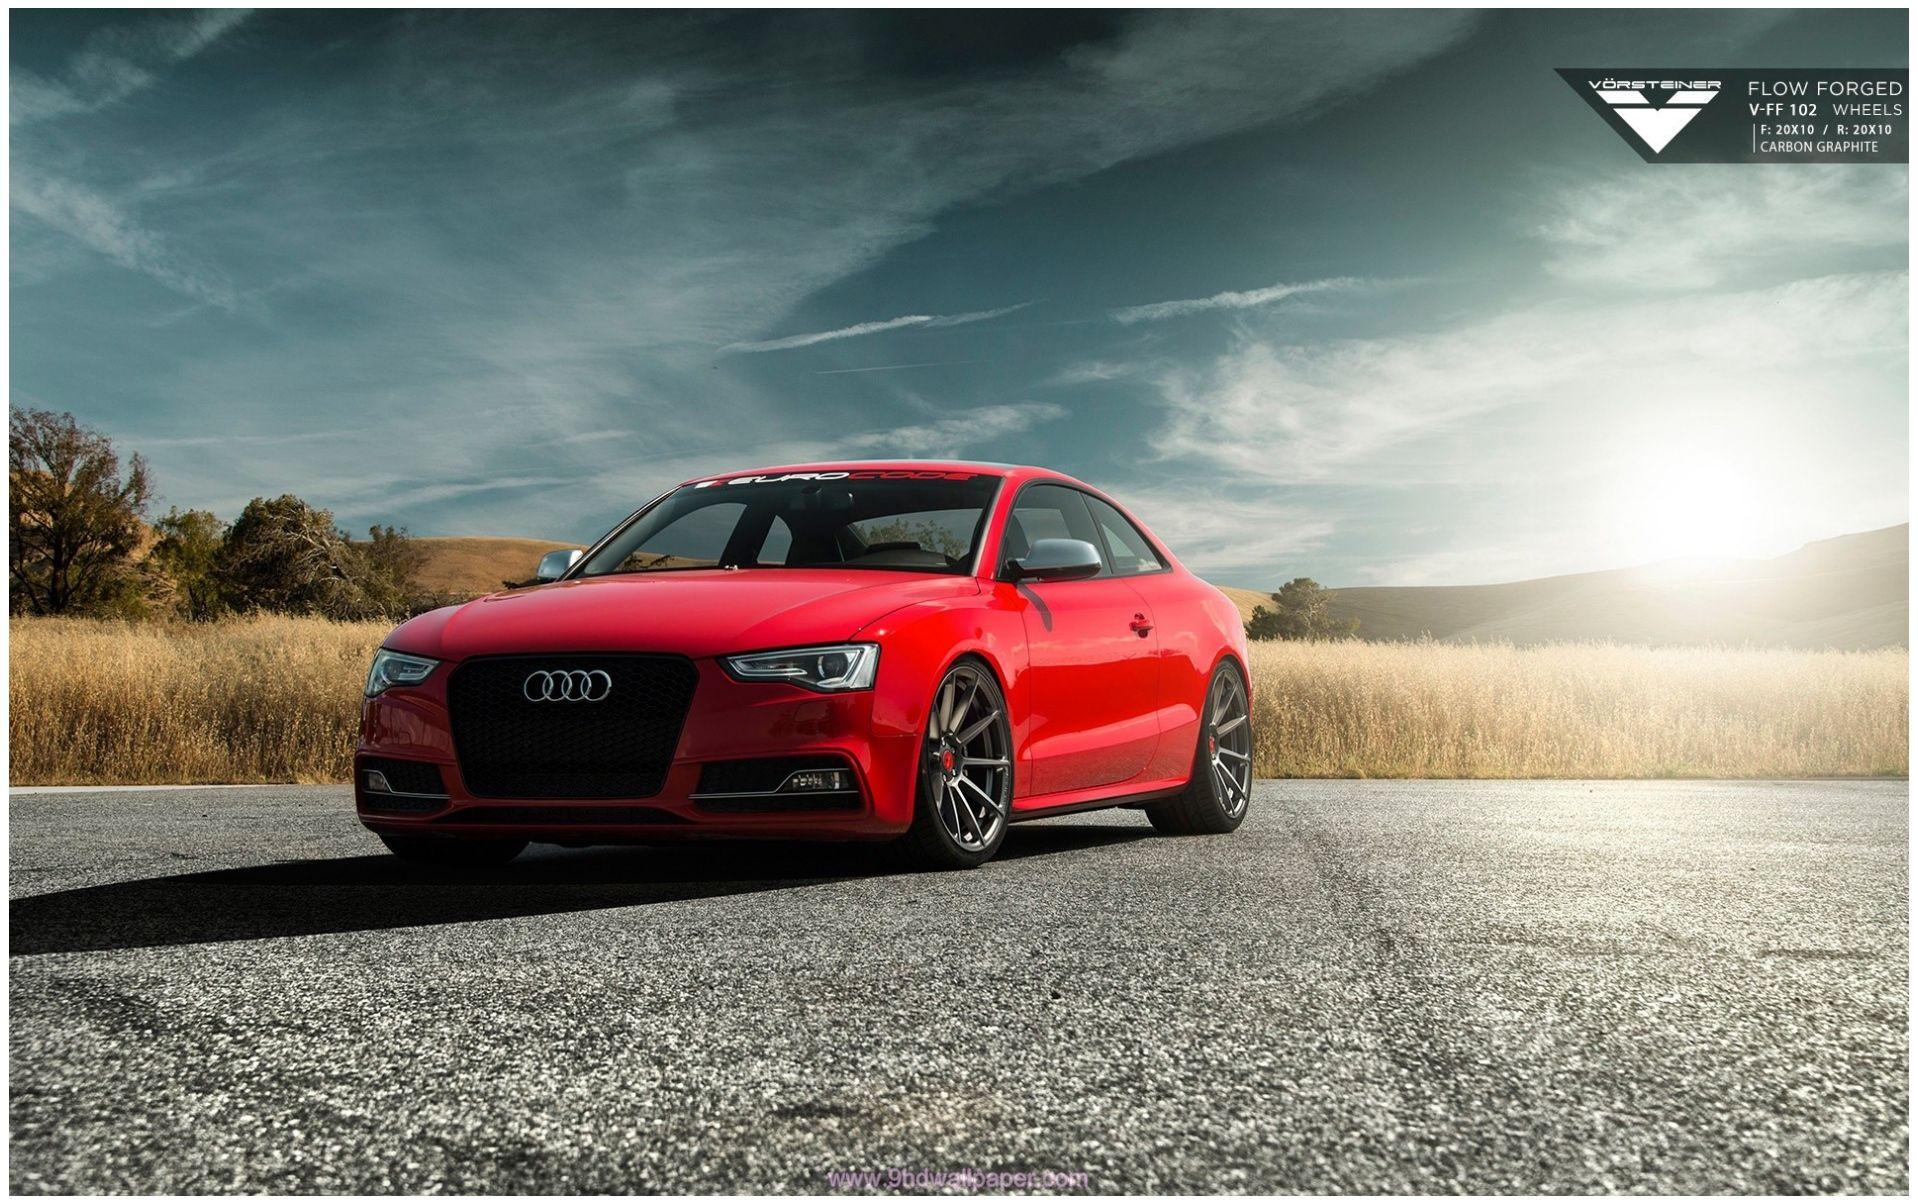 Red Audi Car Wallpapers Hd Free Download